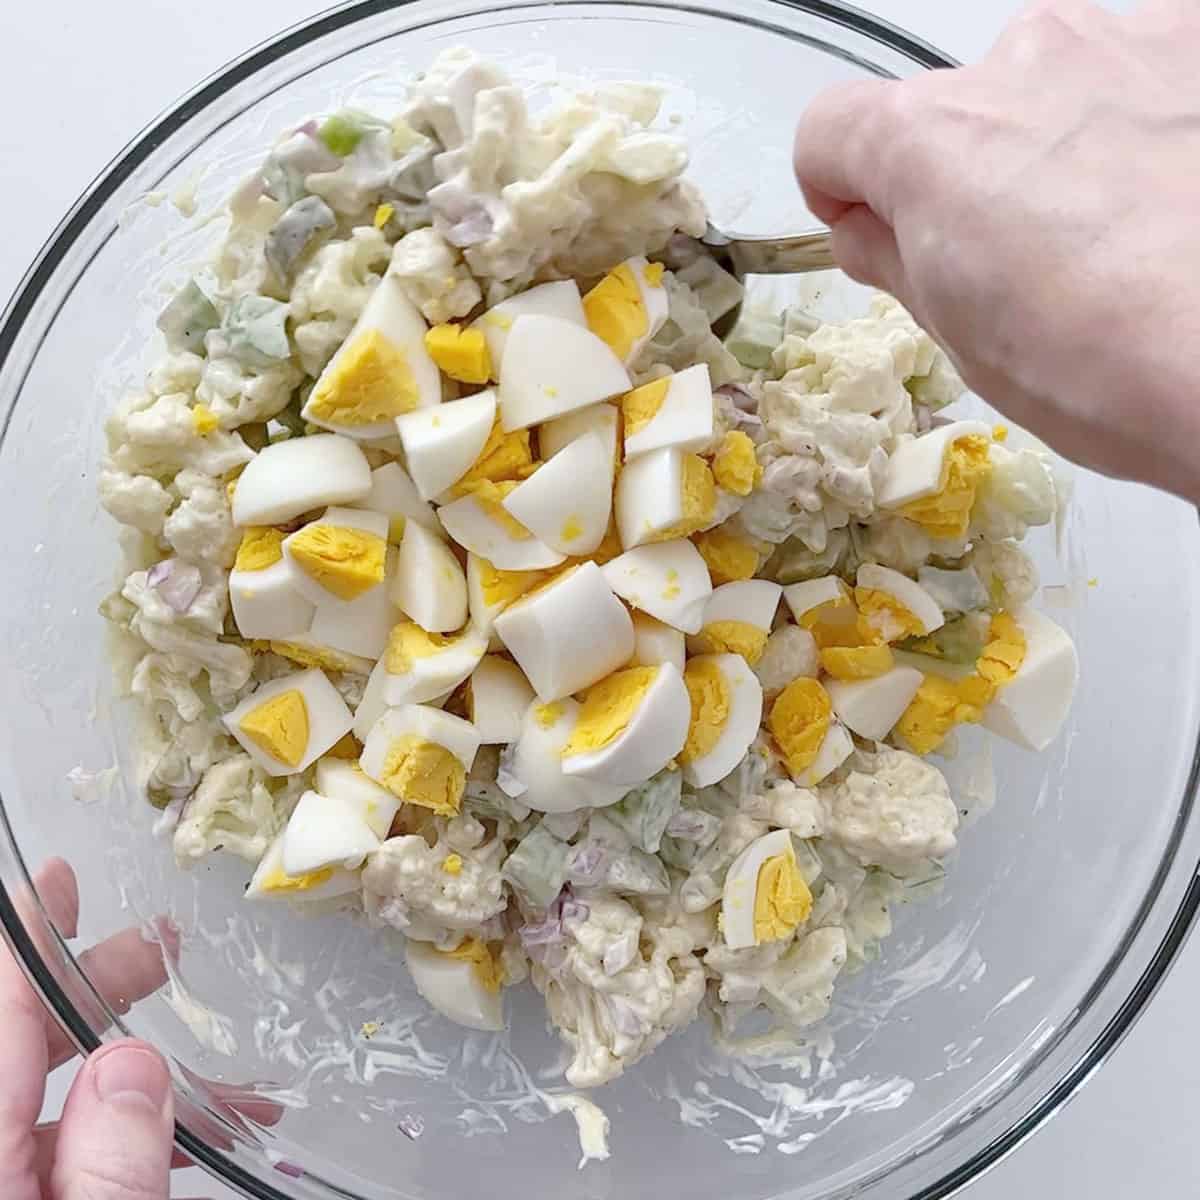 Adding eggs to the salad.